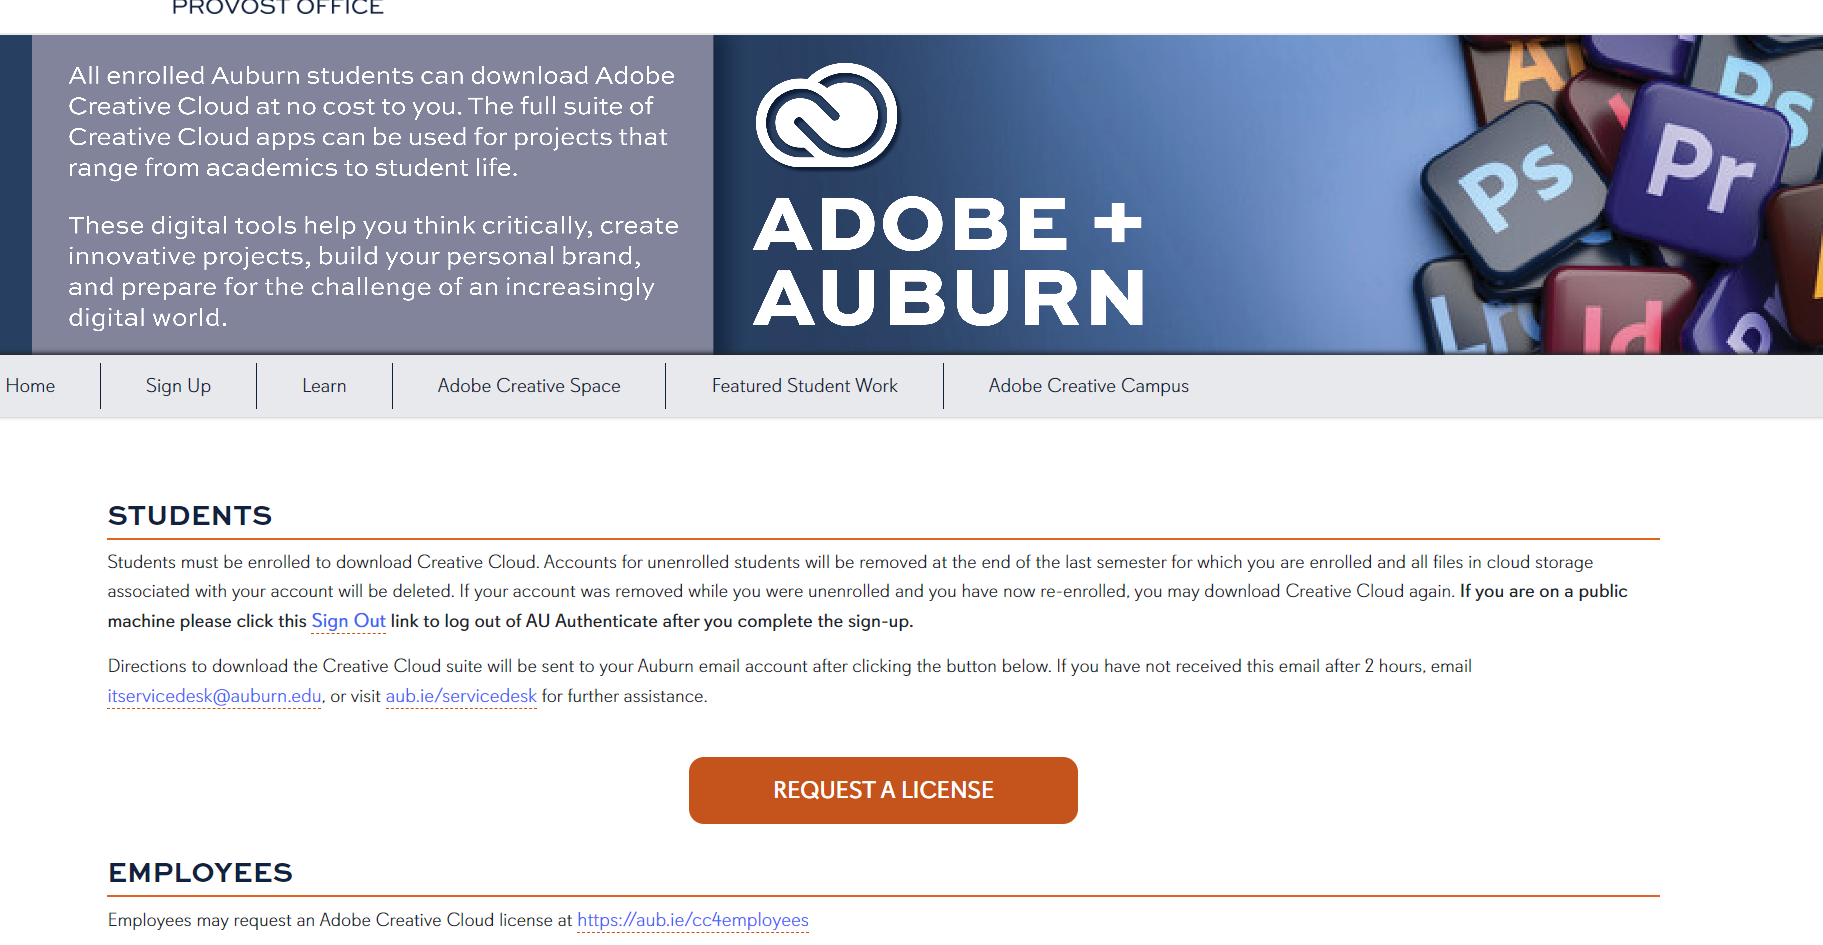 Adobe request a license page